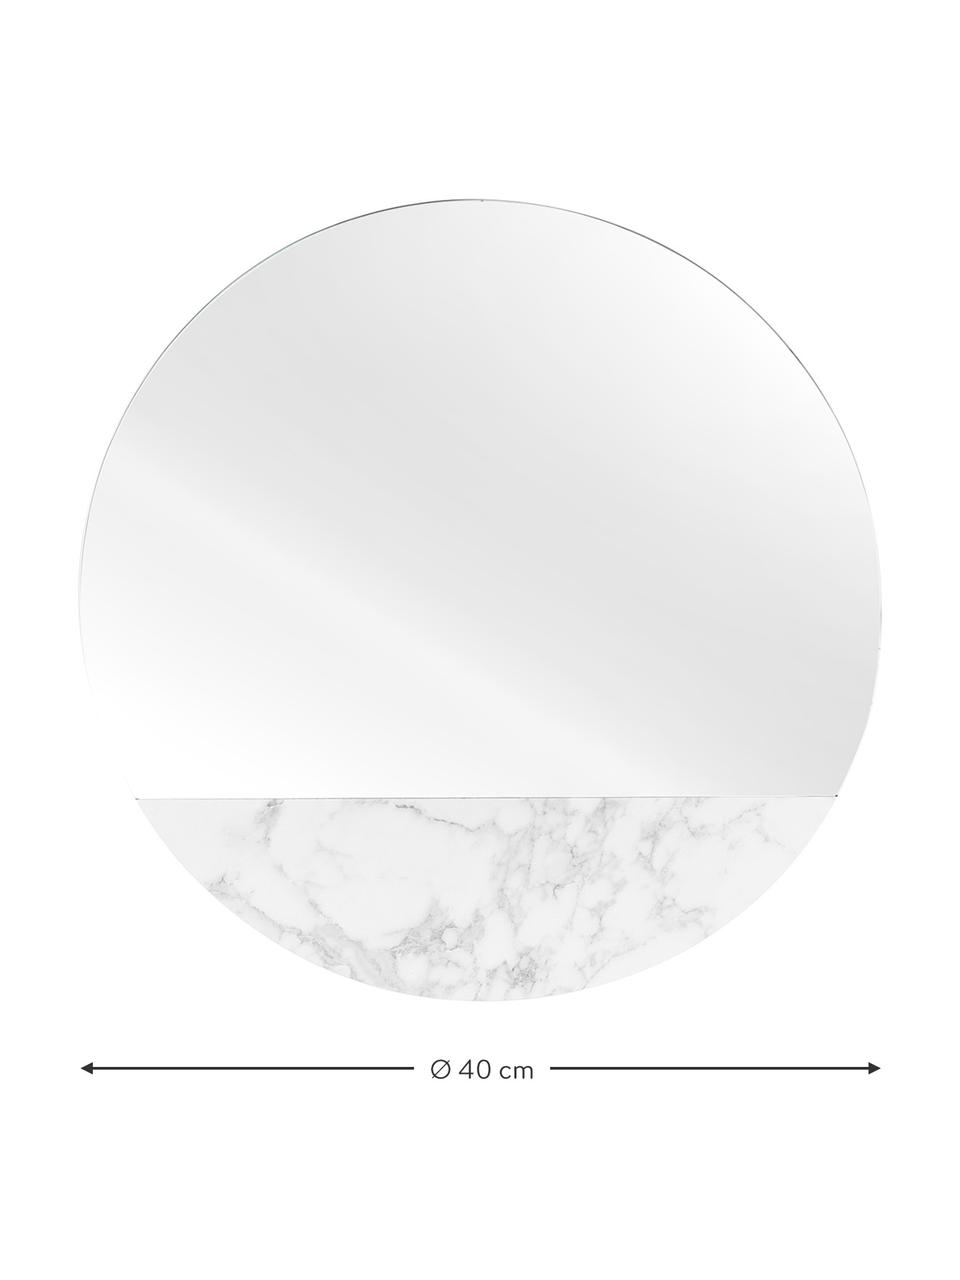 Nástěnné zrcadlo Stockholm, Mramorovaná bílá, Ø 40 cm, H 1 cm